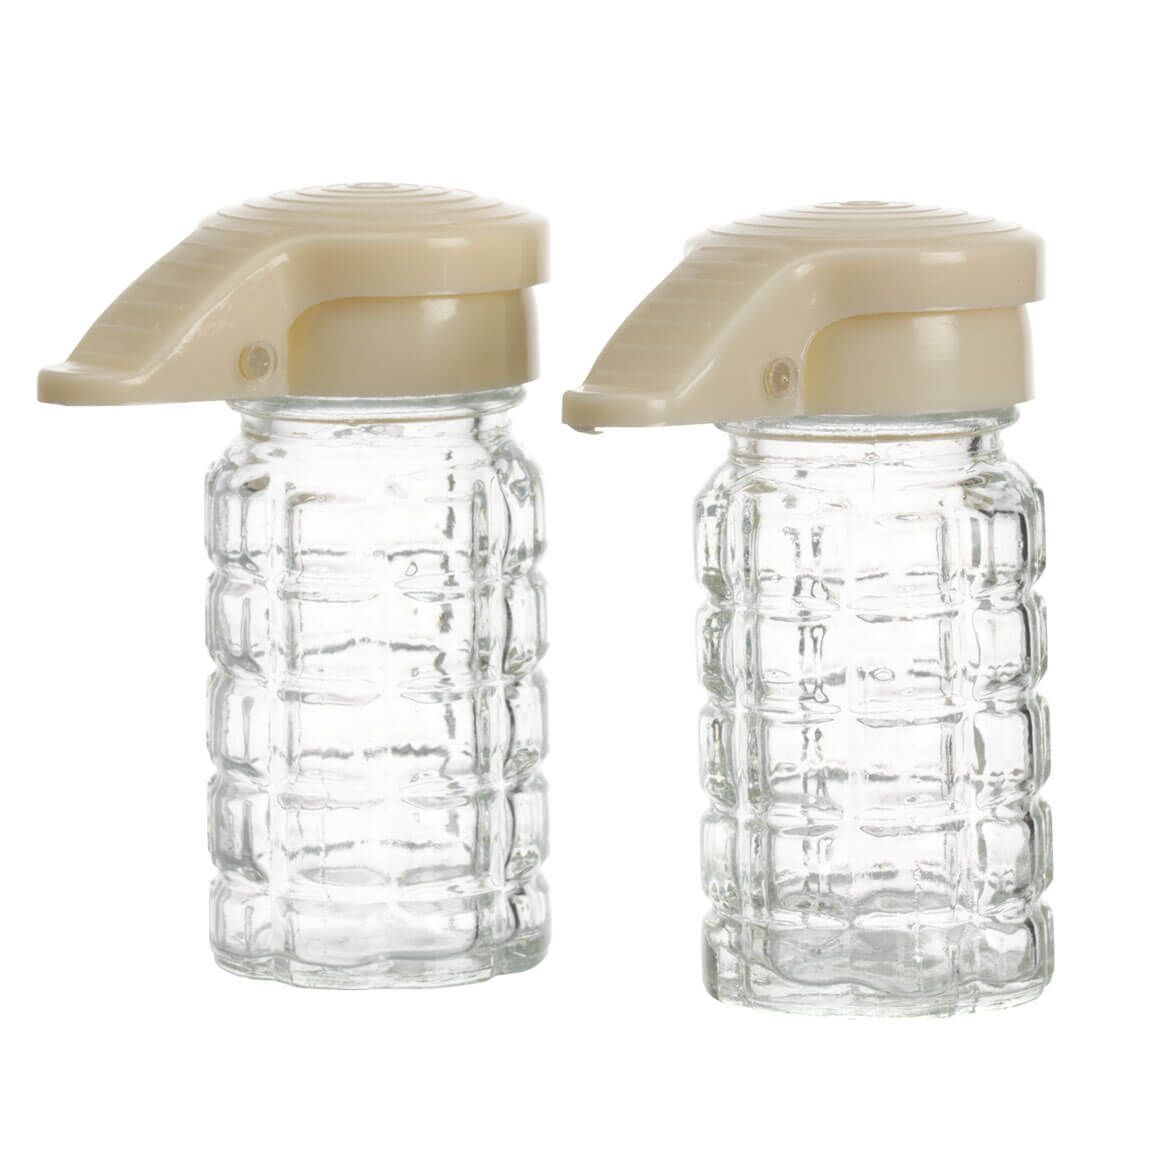 Moisture Proof Salt and Pepper Shakers + '-' + 358706